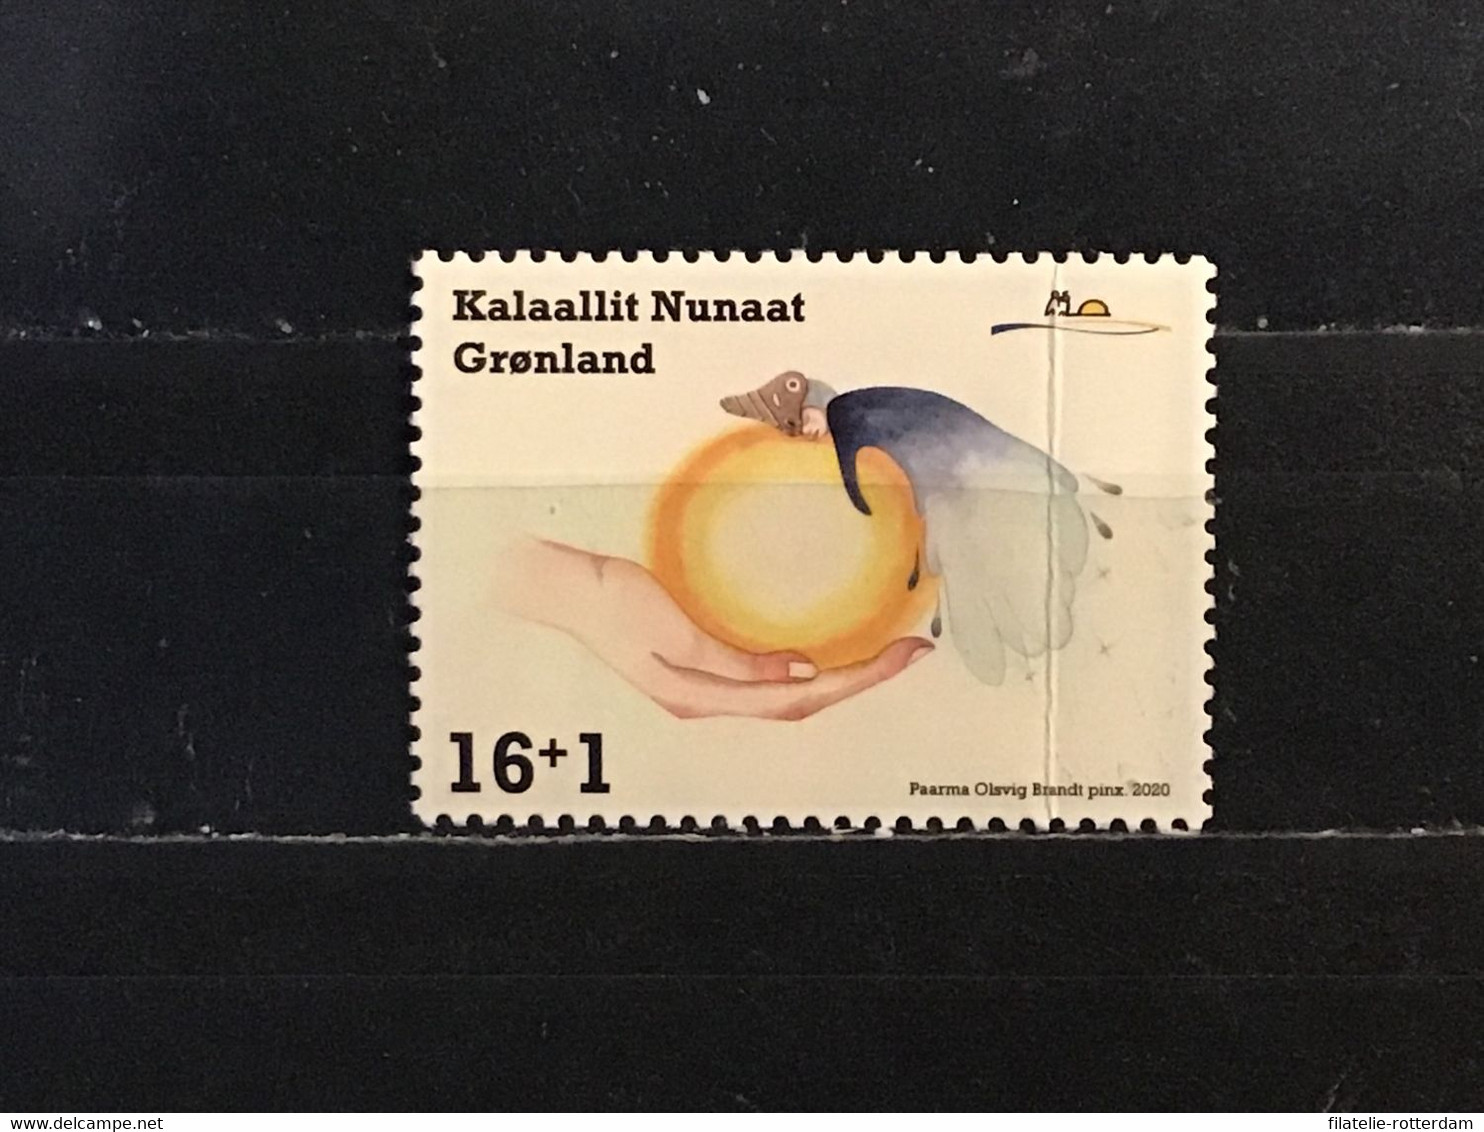 Groenland / Greenland - Postfris / MNH - Covid-19 / Corona 2020 - Unused Stamps